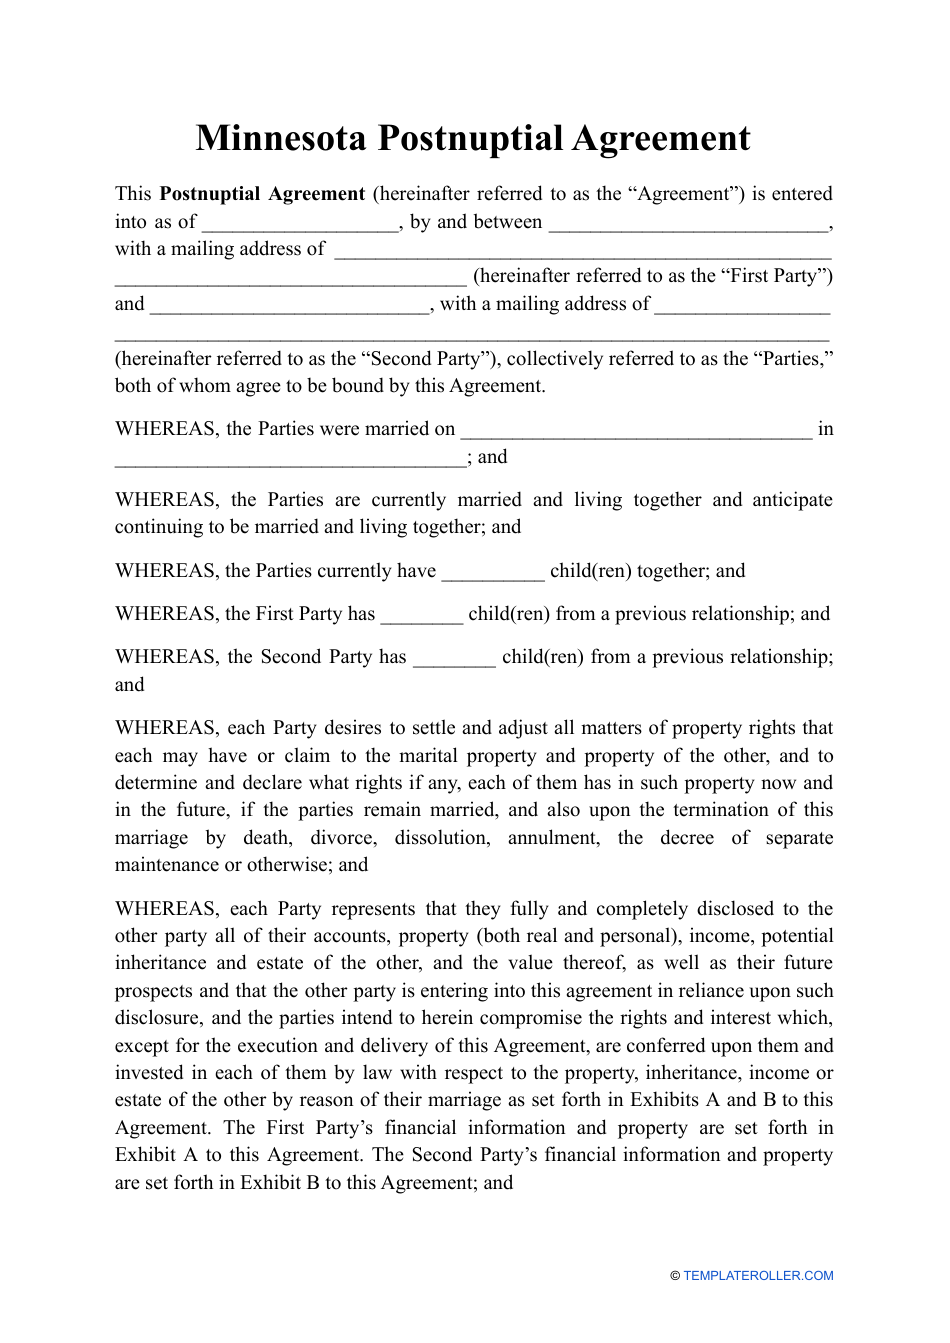 Postnuptial Agreement Template - Minnesota, Page 1